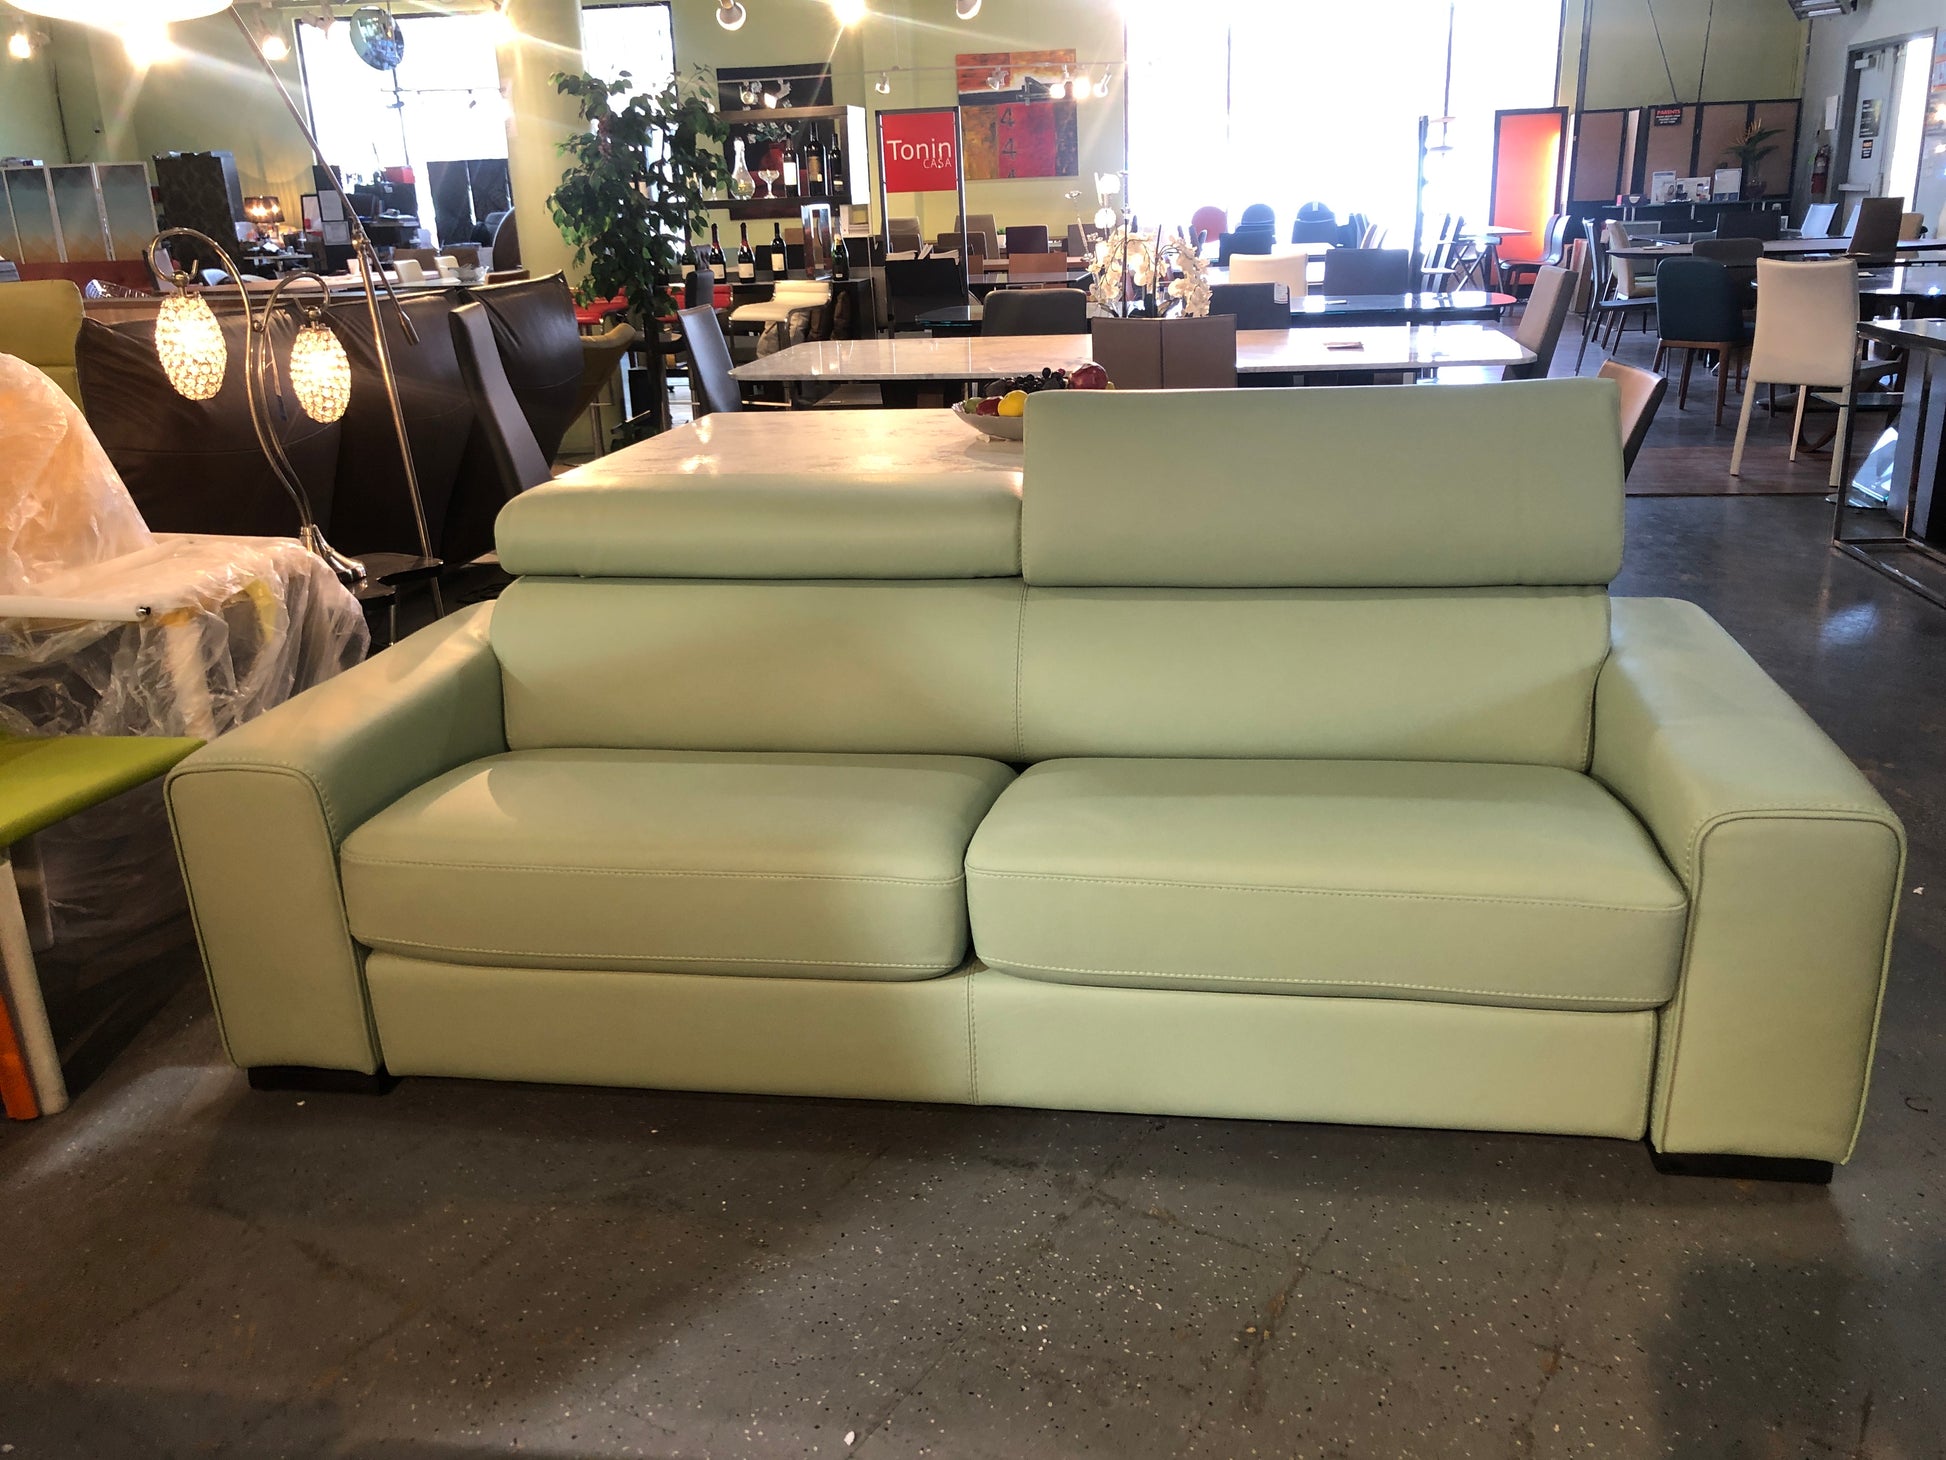 BARDI - Kalamo Sofa - Made in Italy - Eurohaus Modern Furniture LLC